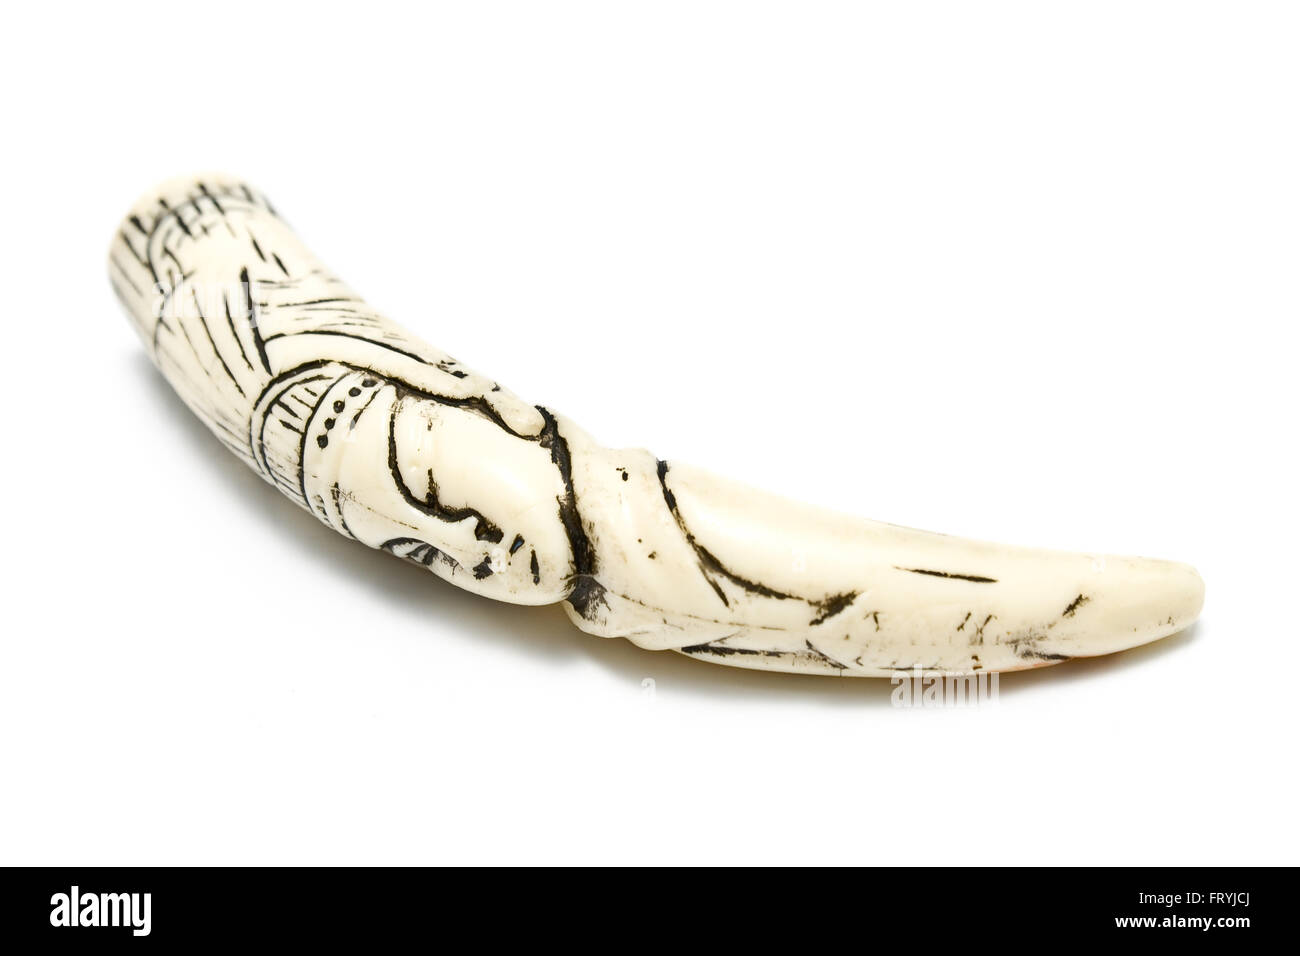 Carved ivory tusk isolated on white Stock Photo